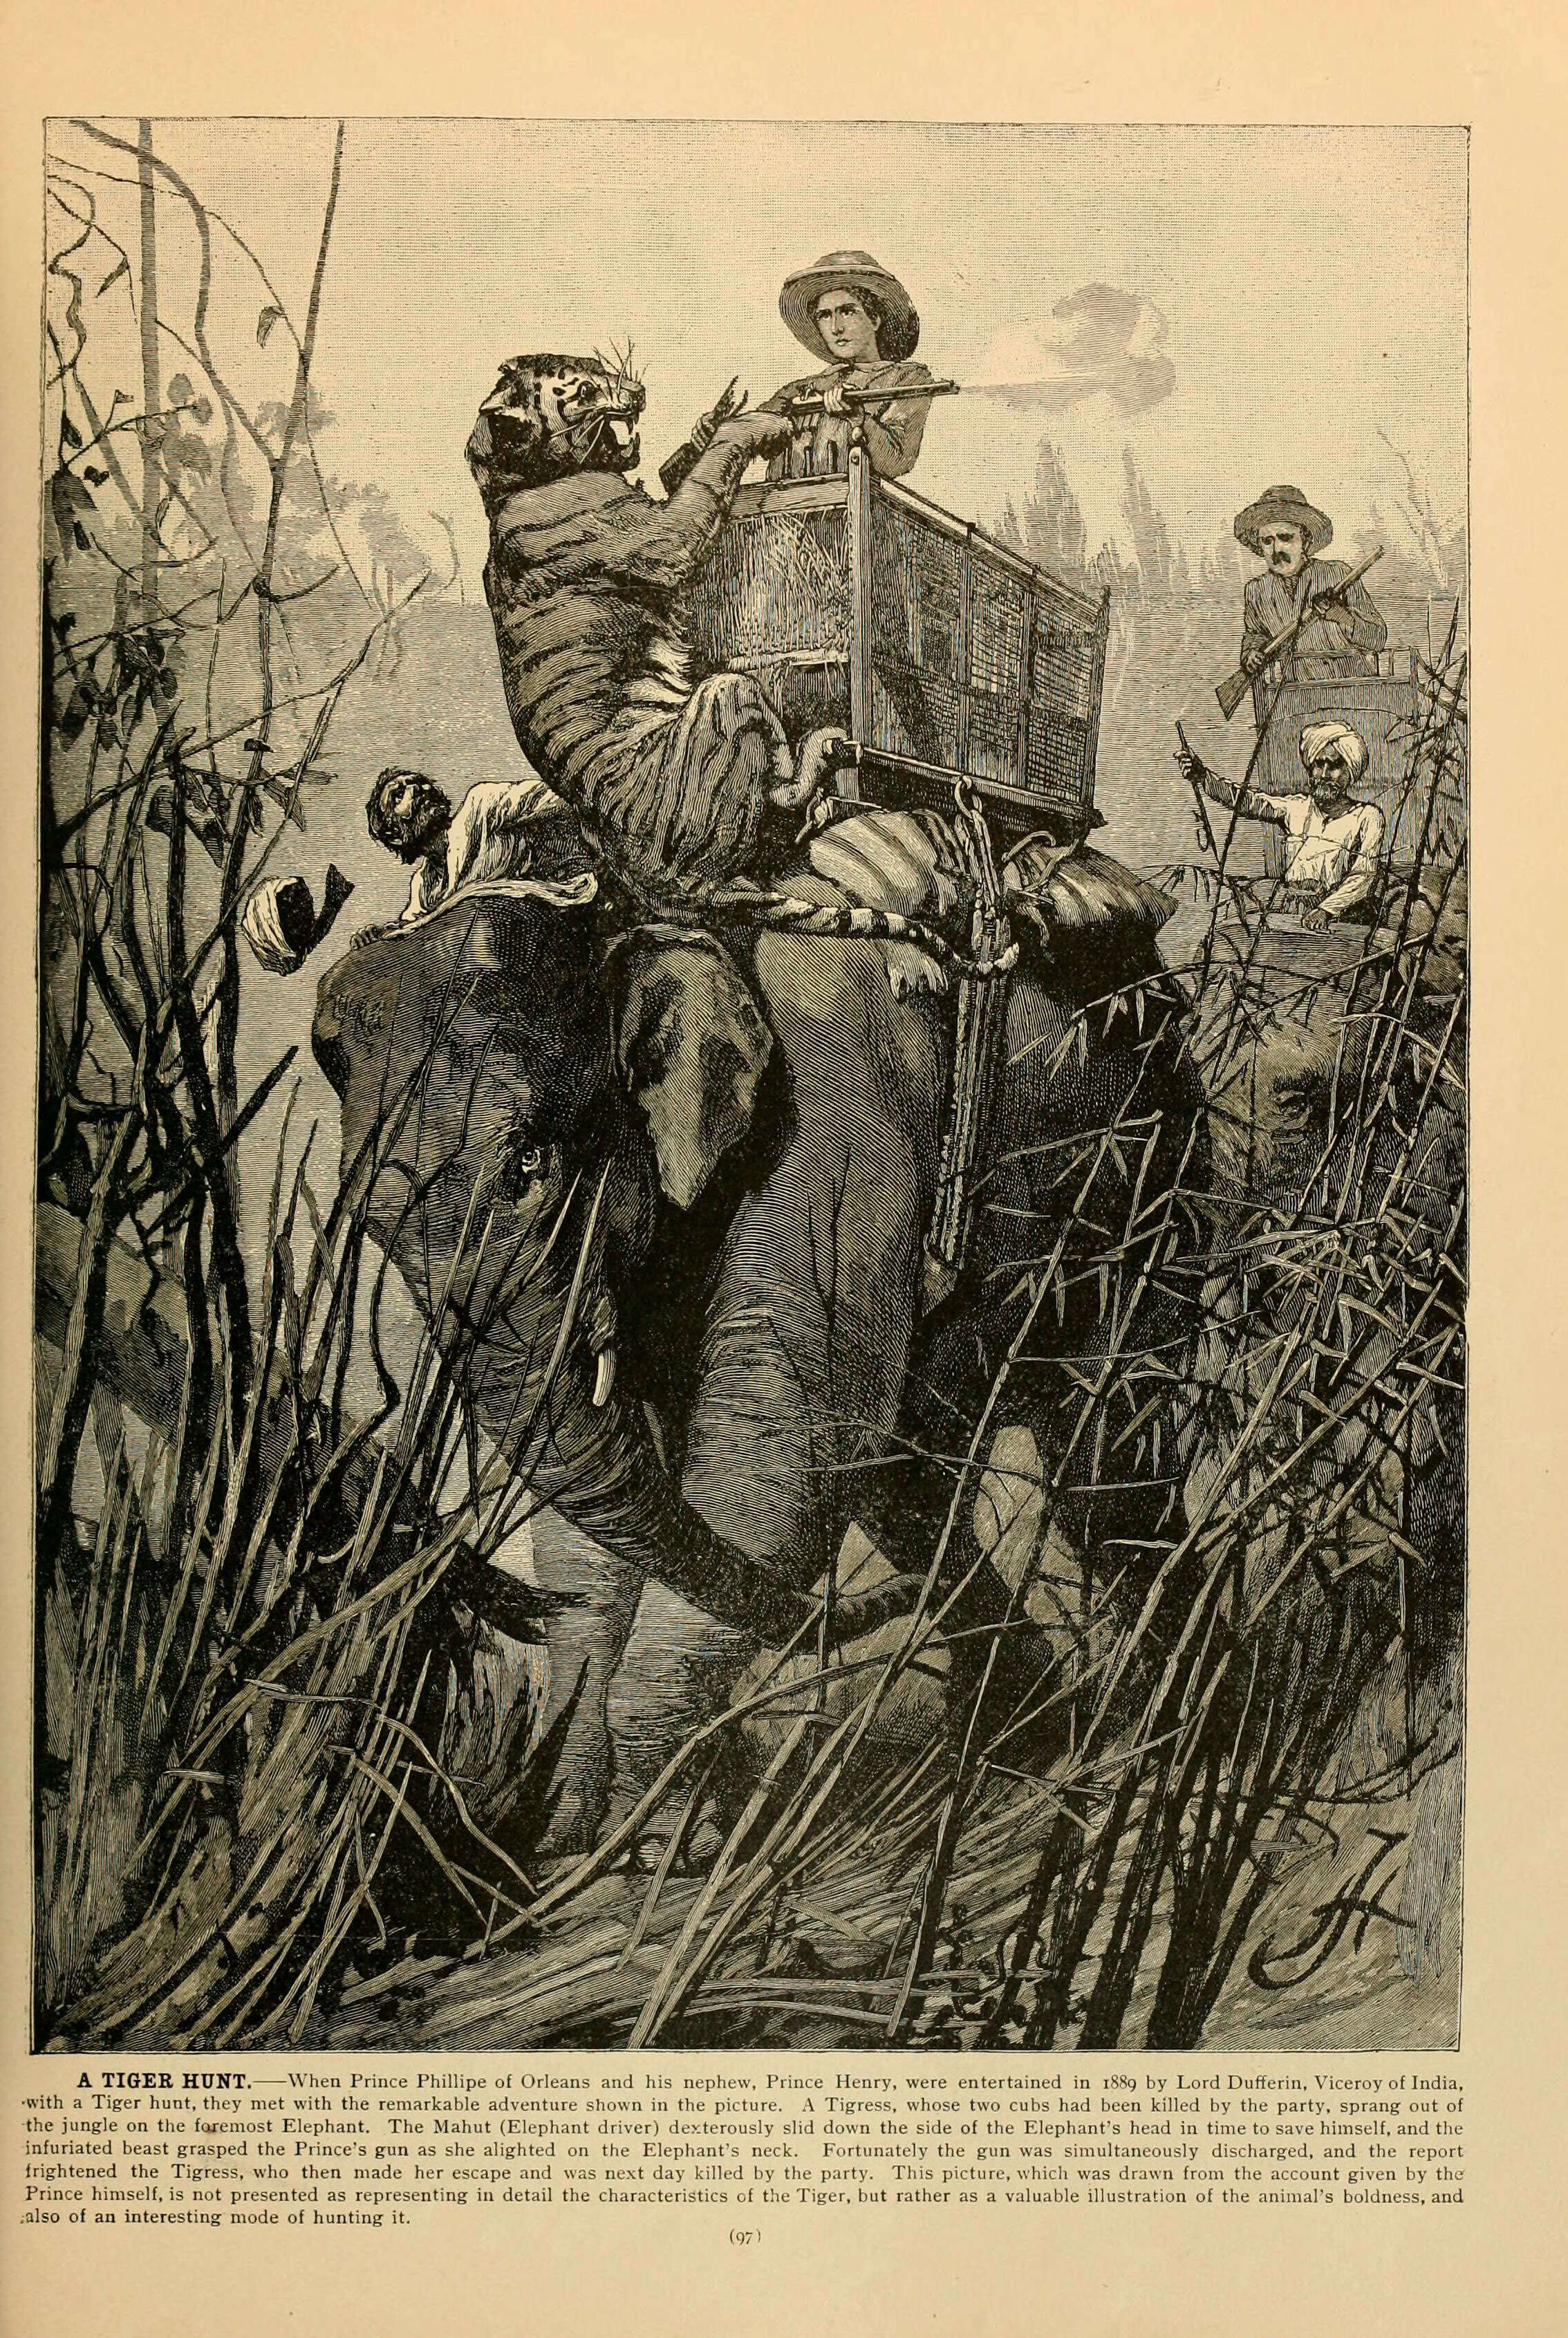 Imagem de Panthera Oken 1816